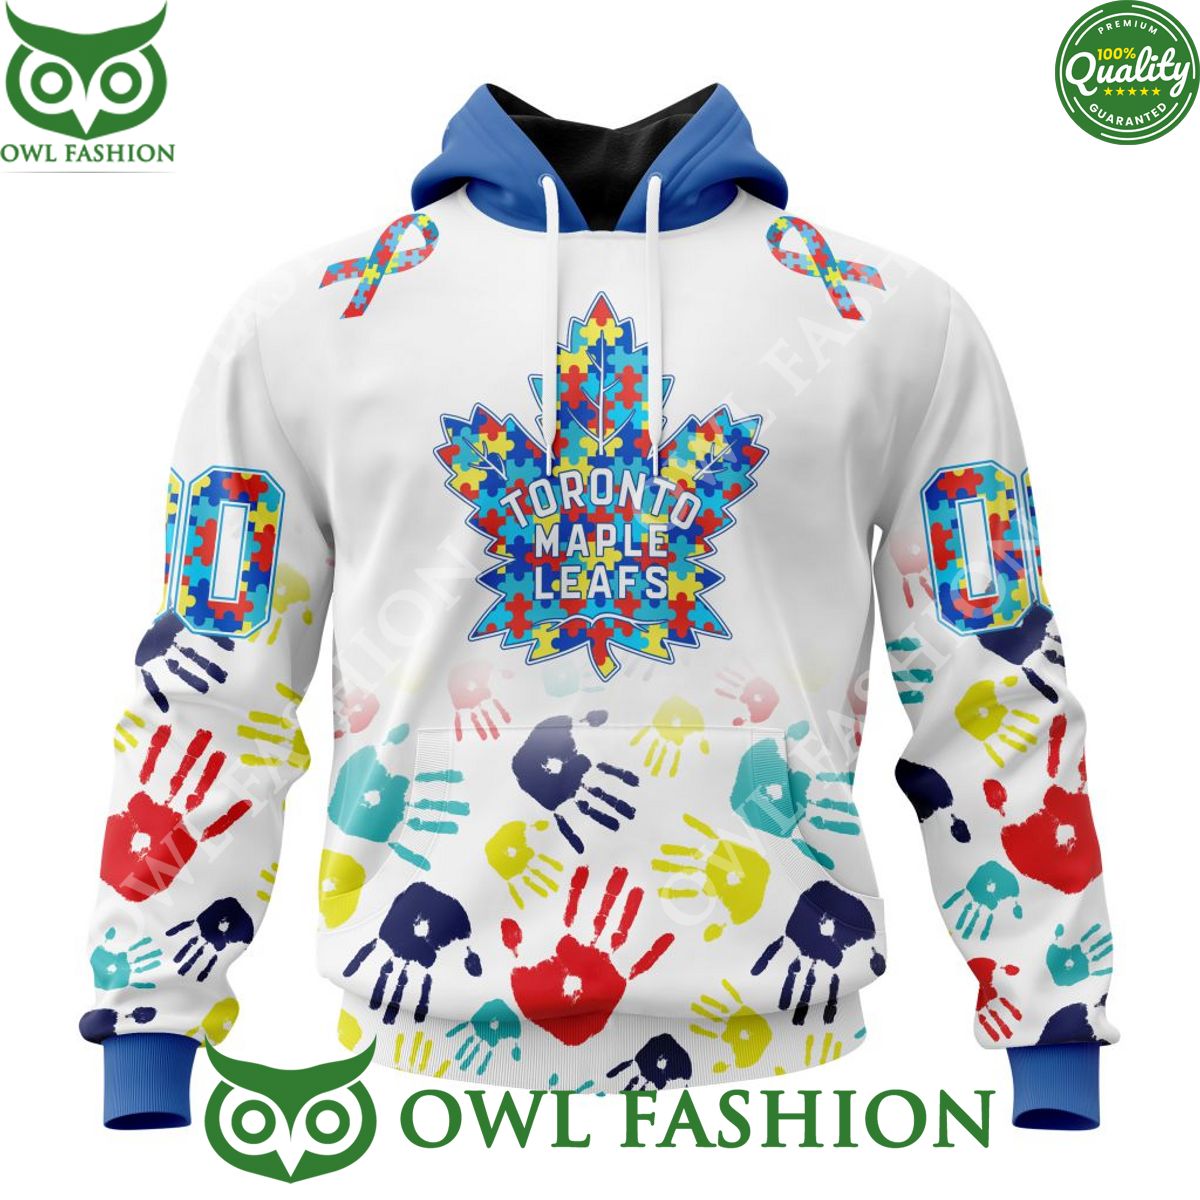 personalized nhl toronto maple leafs autism awareness hand pattern paint hoodie shirt 1 M9ncu.jpg